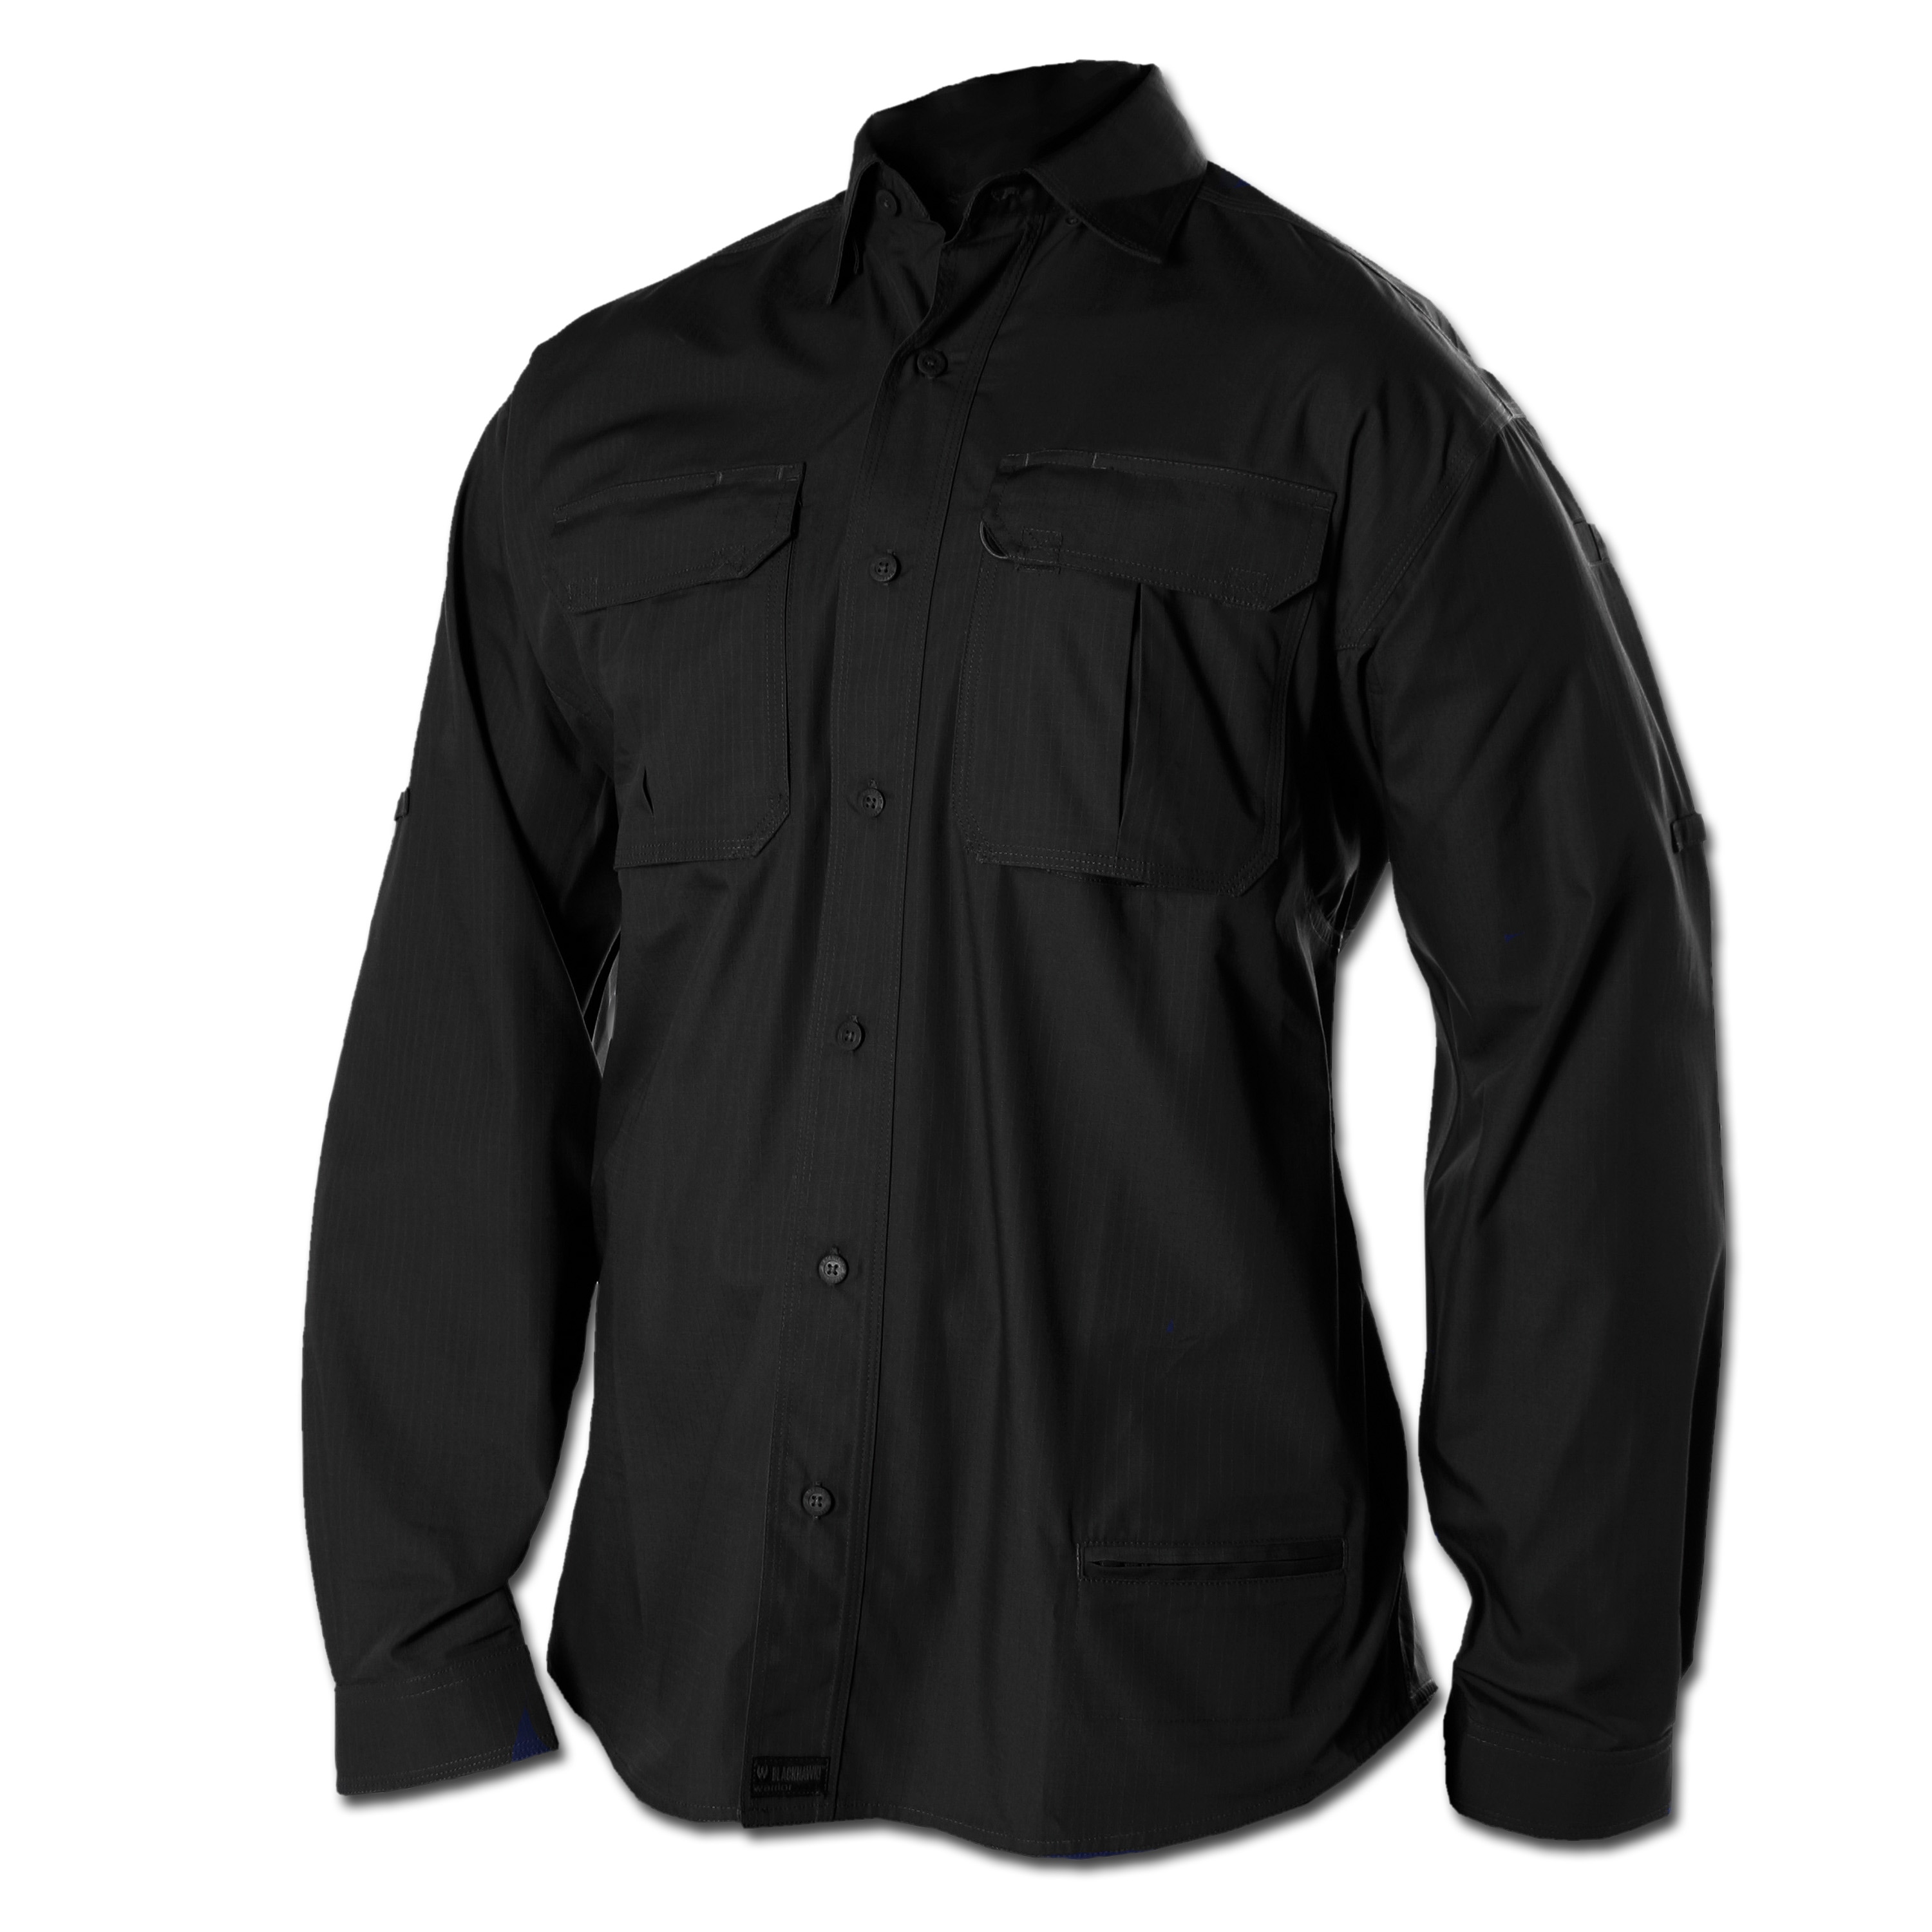 Blackhawk Performance Cotton Tactical Shirt Long Sleeve black ...